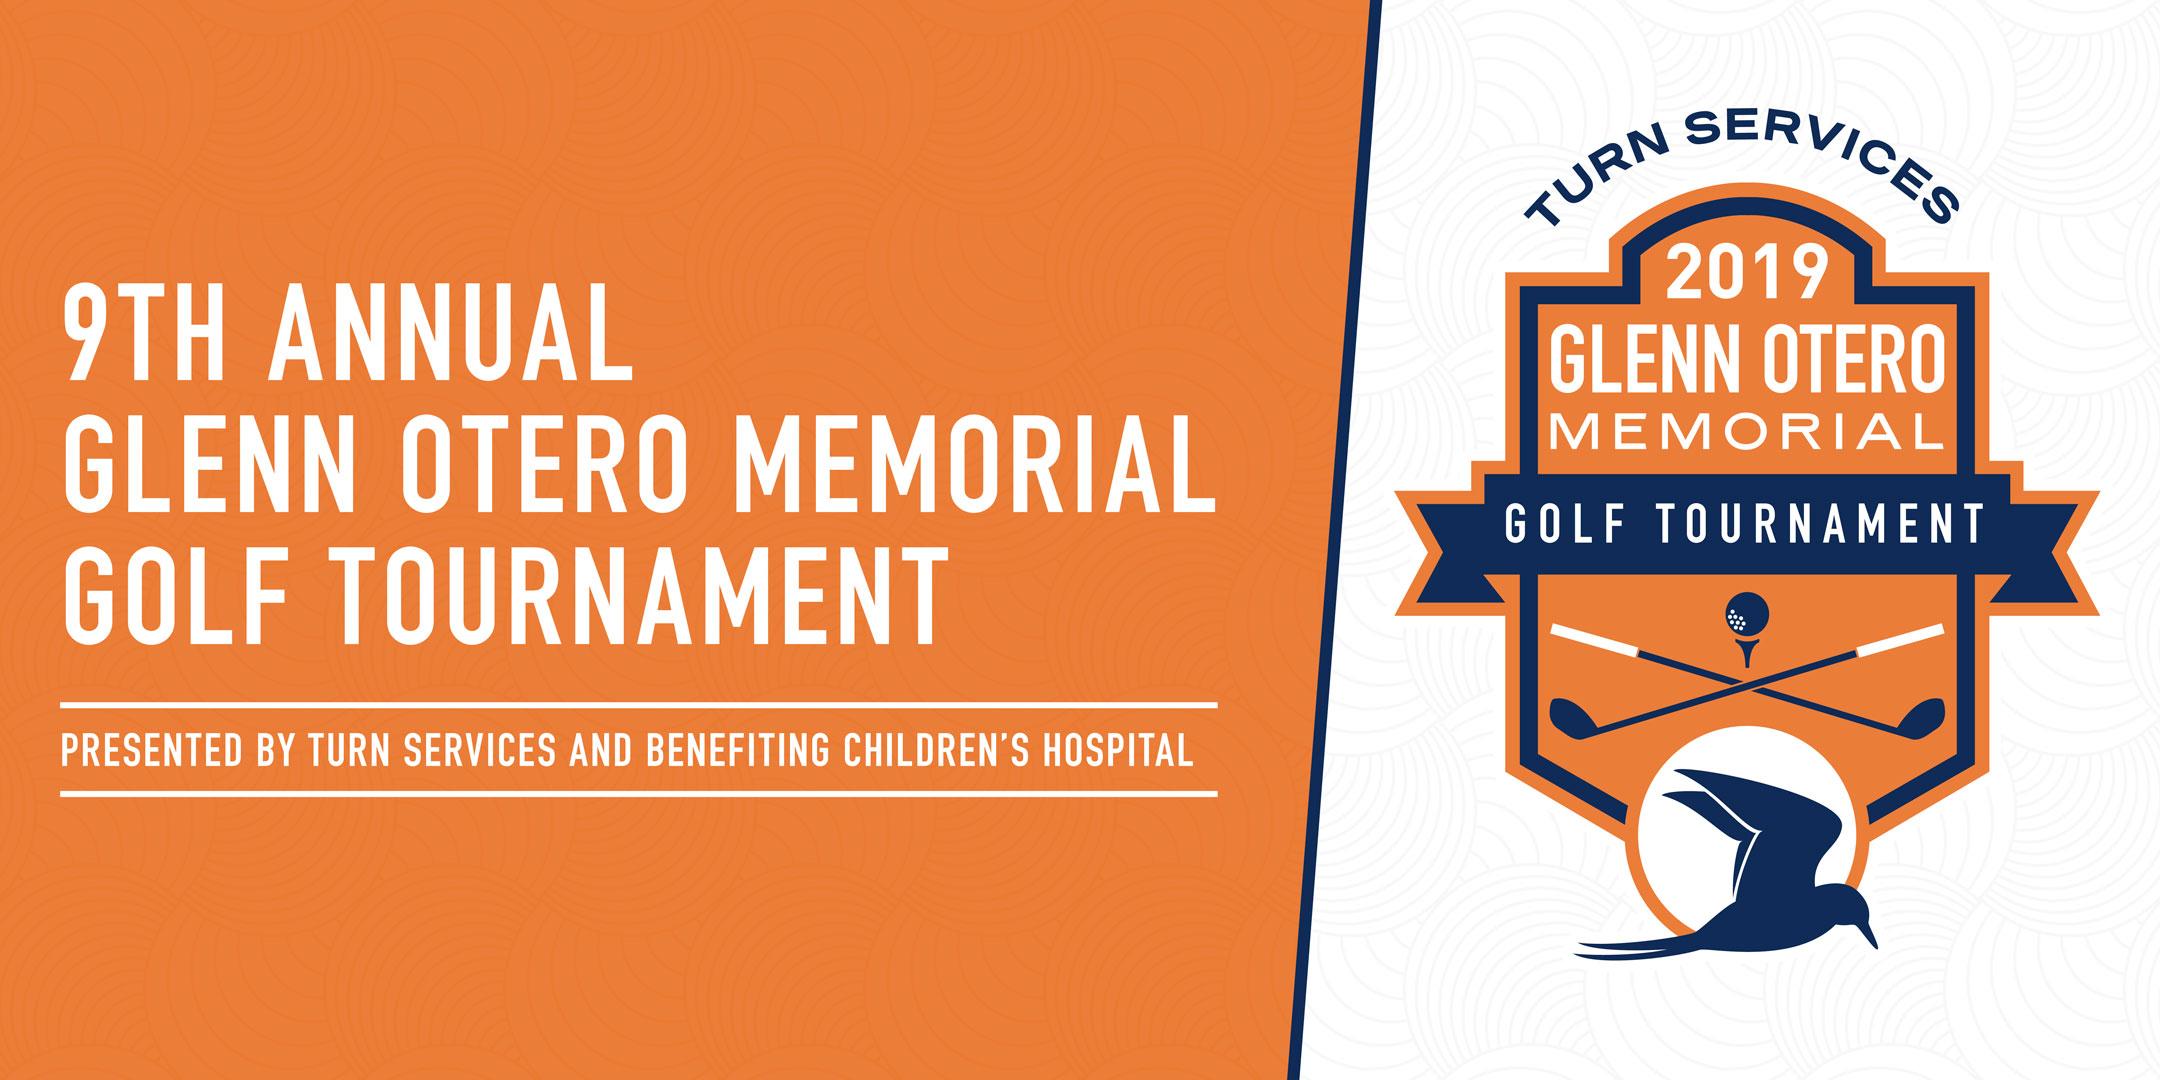 9th Annual Glenn Otero Memorial Golf Tournament